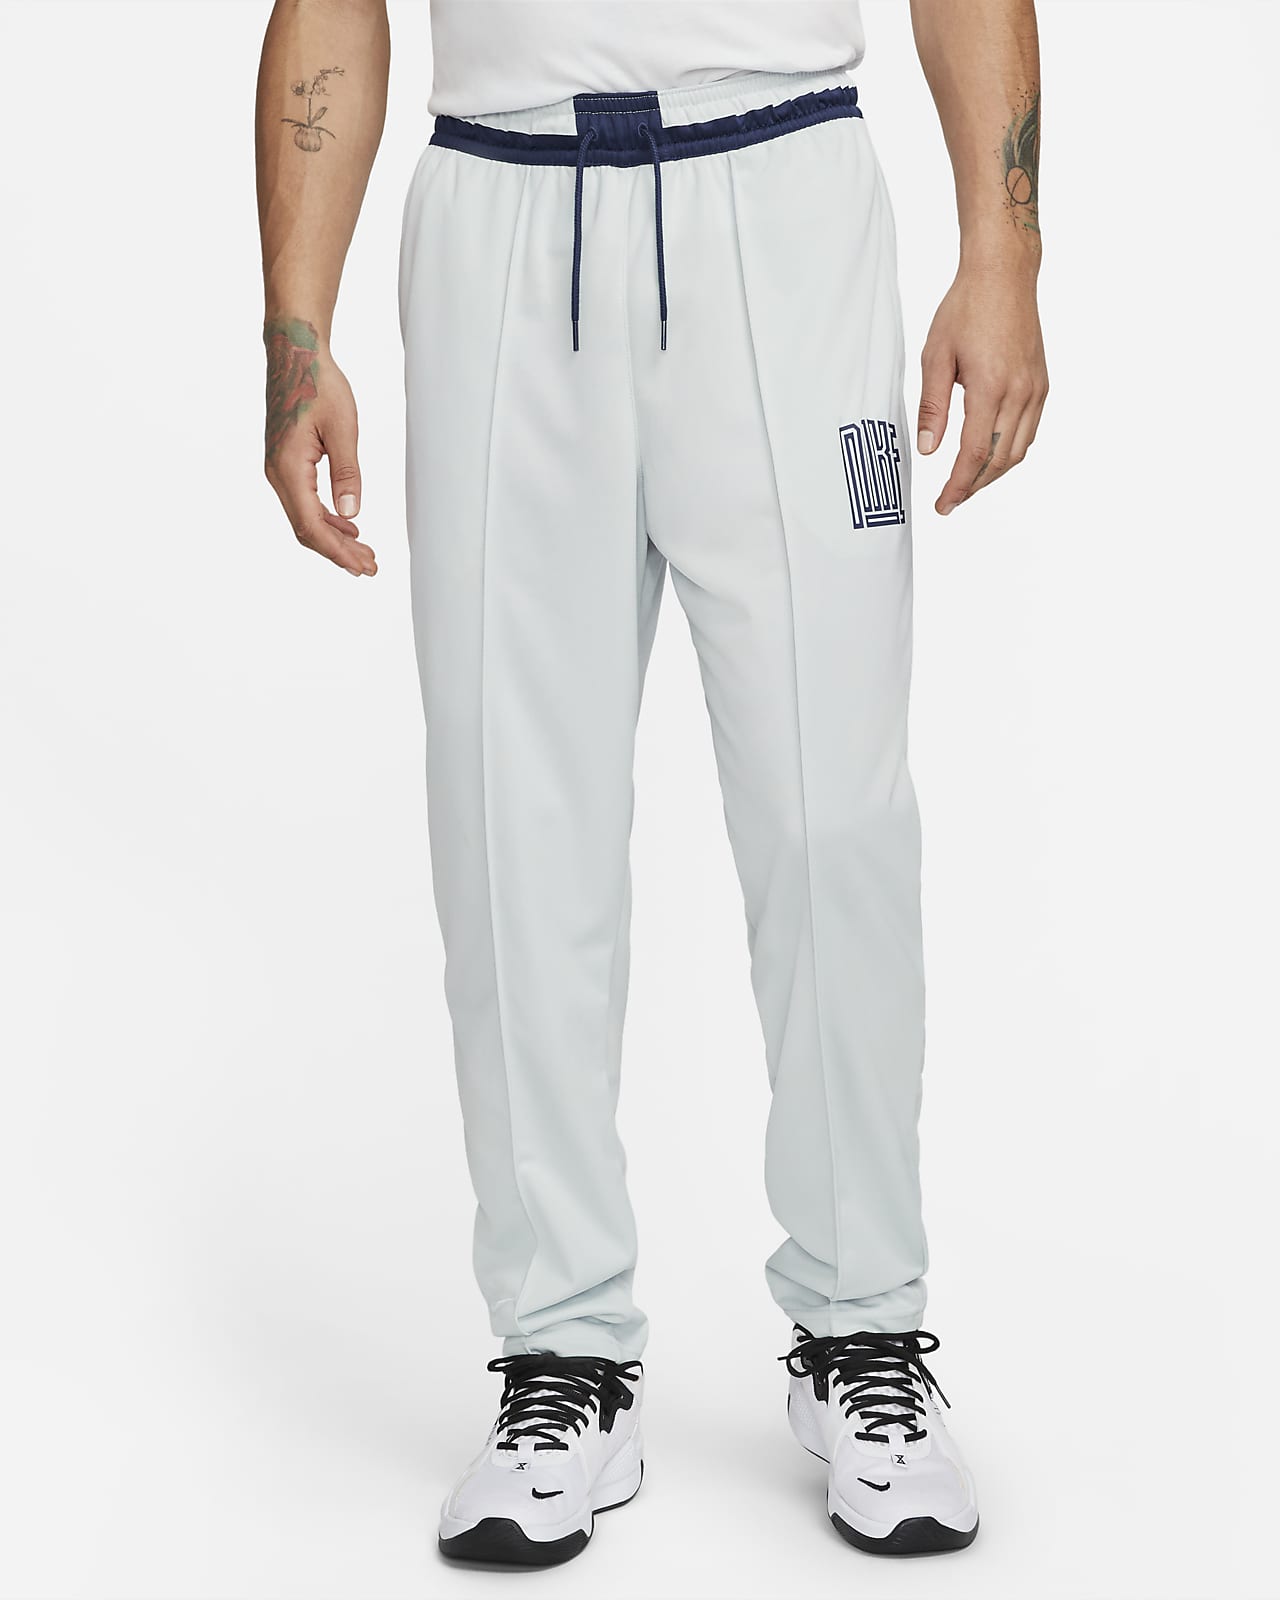 Nike Dri-FIT Men's Basketball Pants